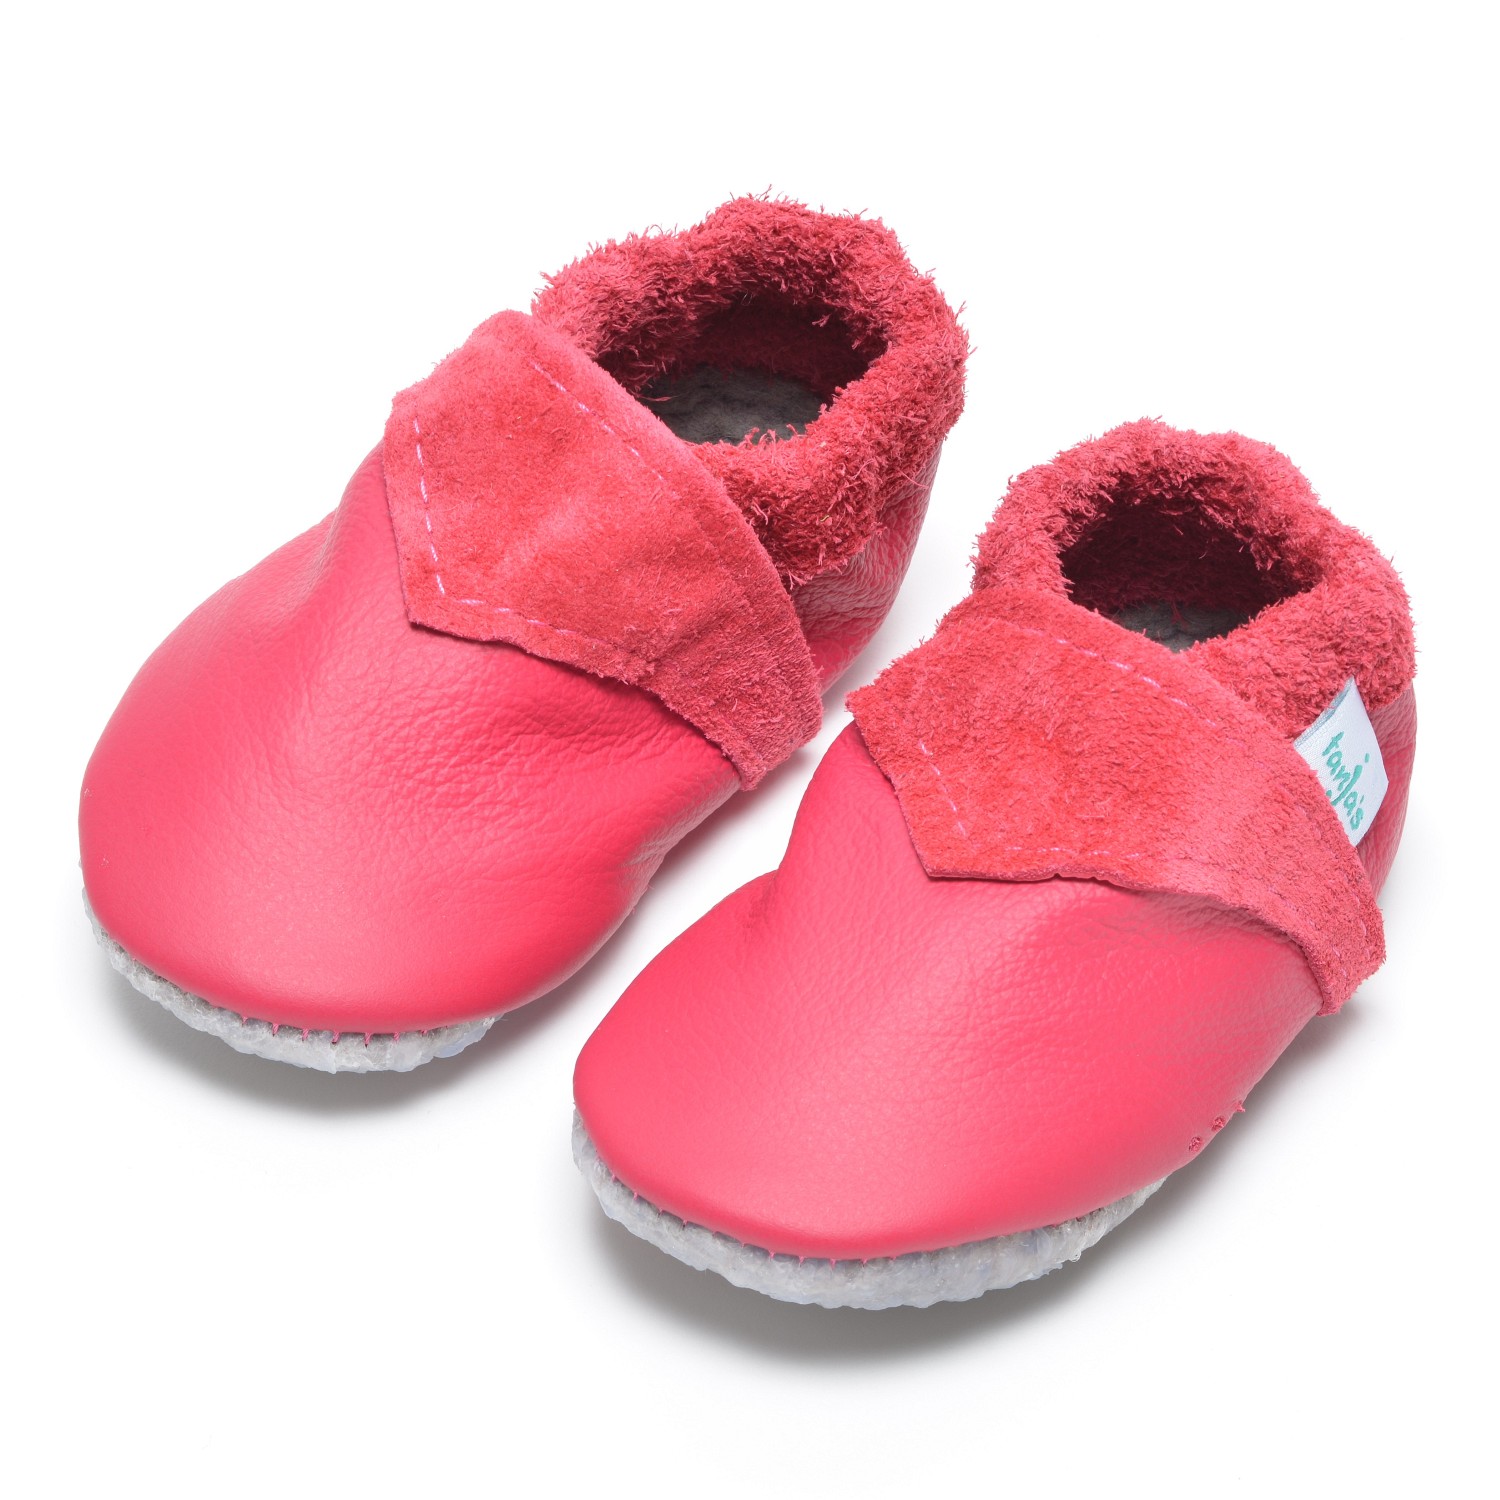 Baby-Lederschuhe "Lieblingsfarbe", pink